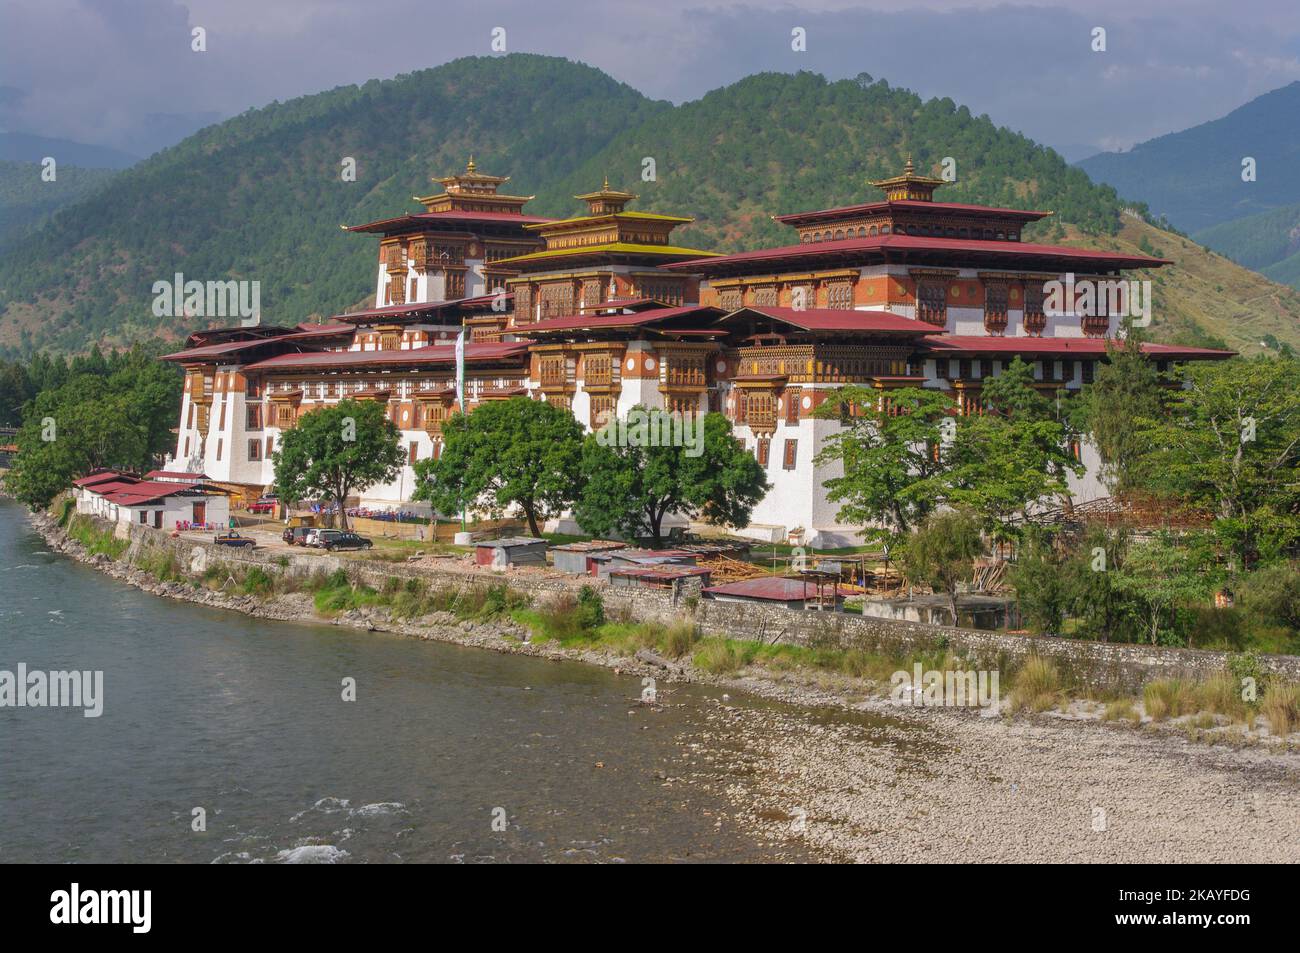 Scenic landscape view of ancient historic landmark Punakha dzong on bank of Mo Chhu river, Western Bhutan Stock Photo